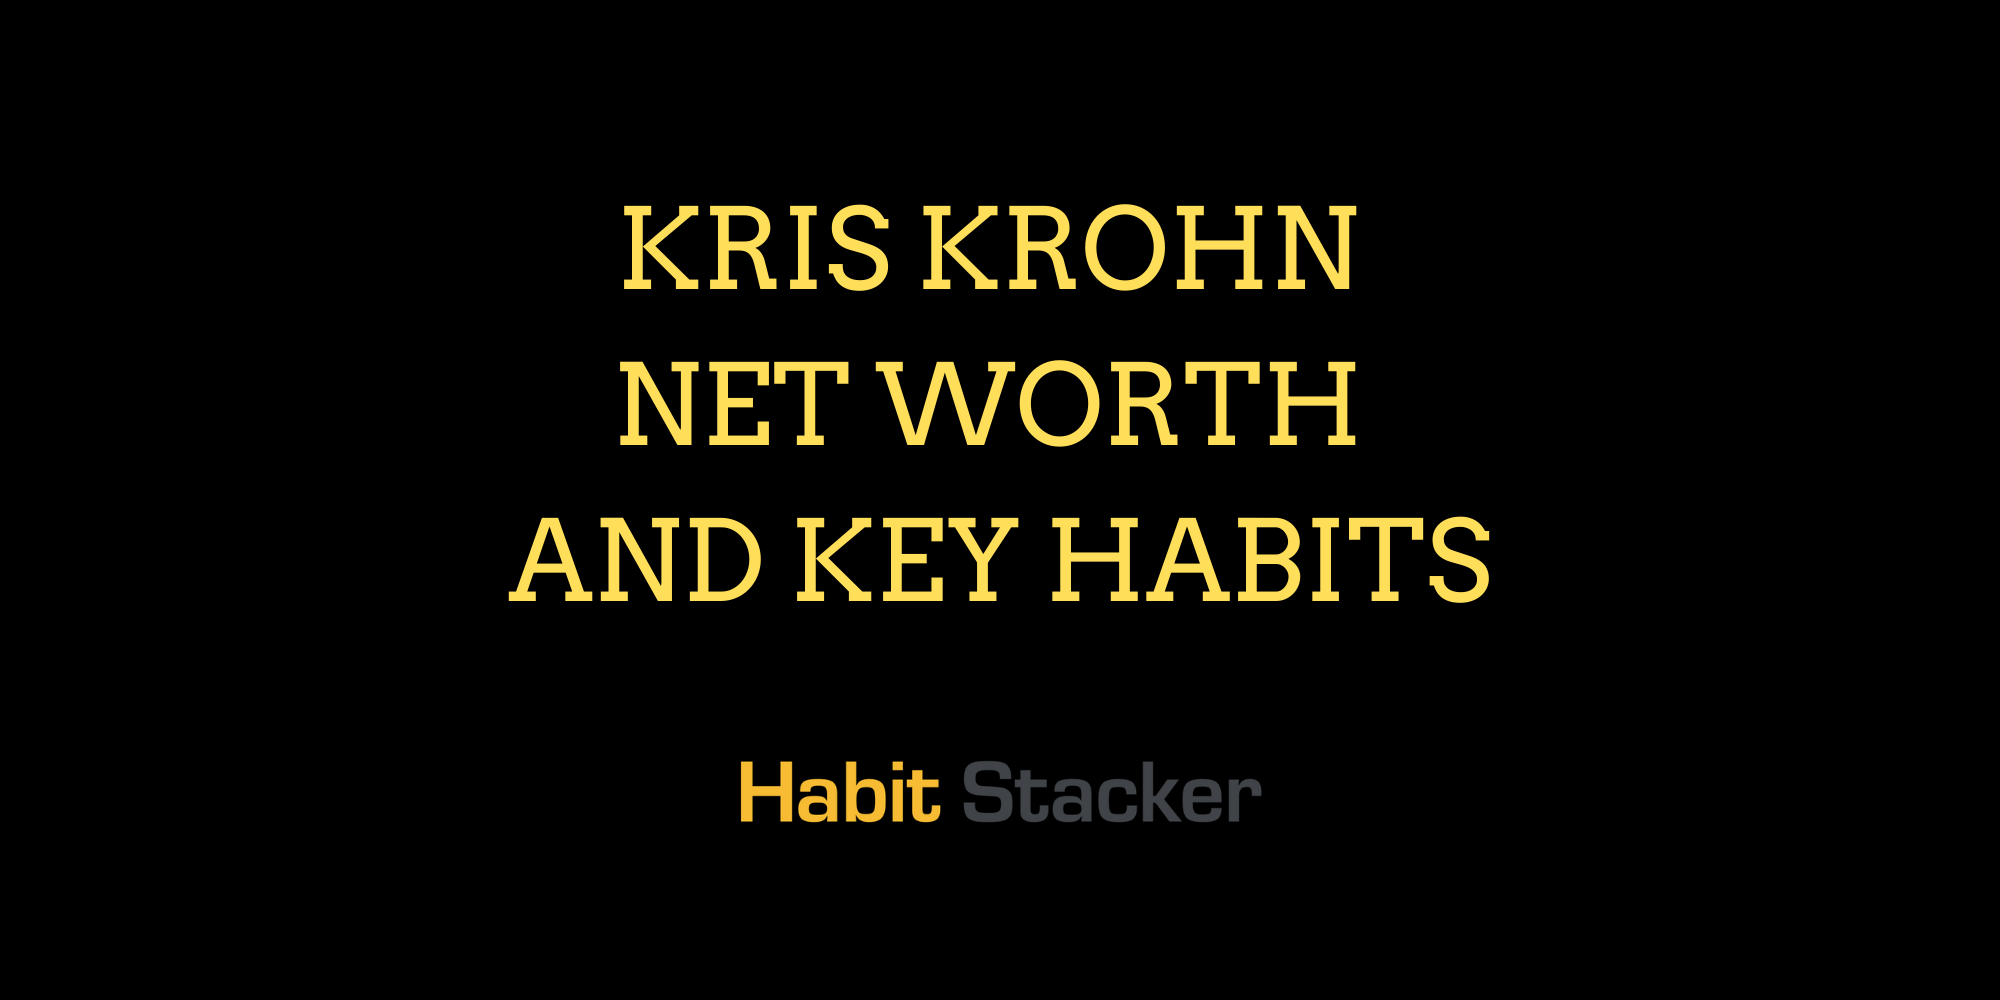 Kris Krohn Net Worth and Key Habits